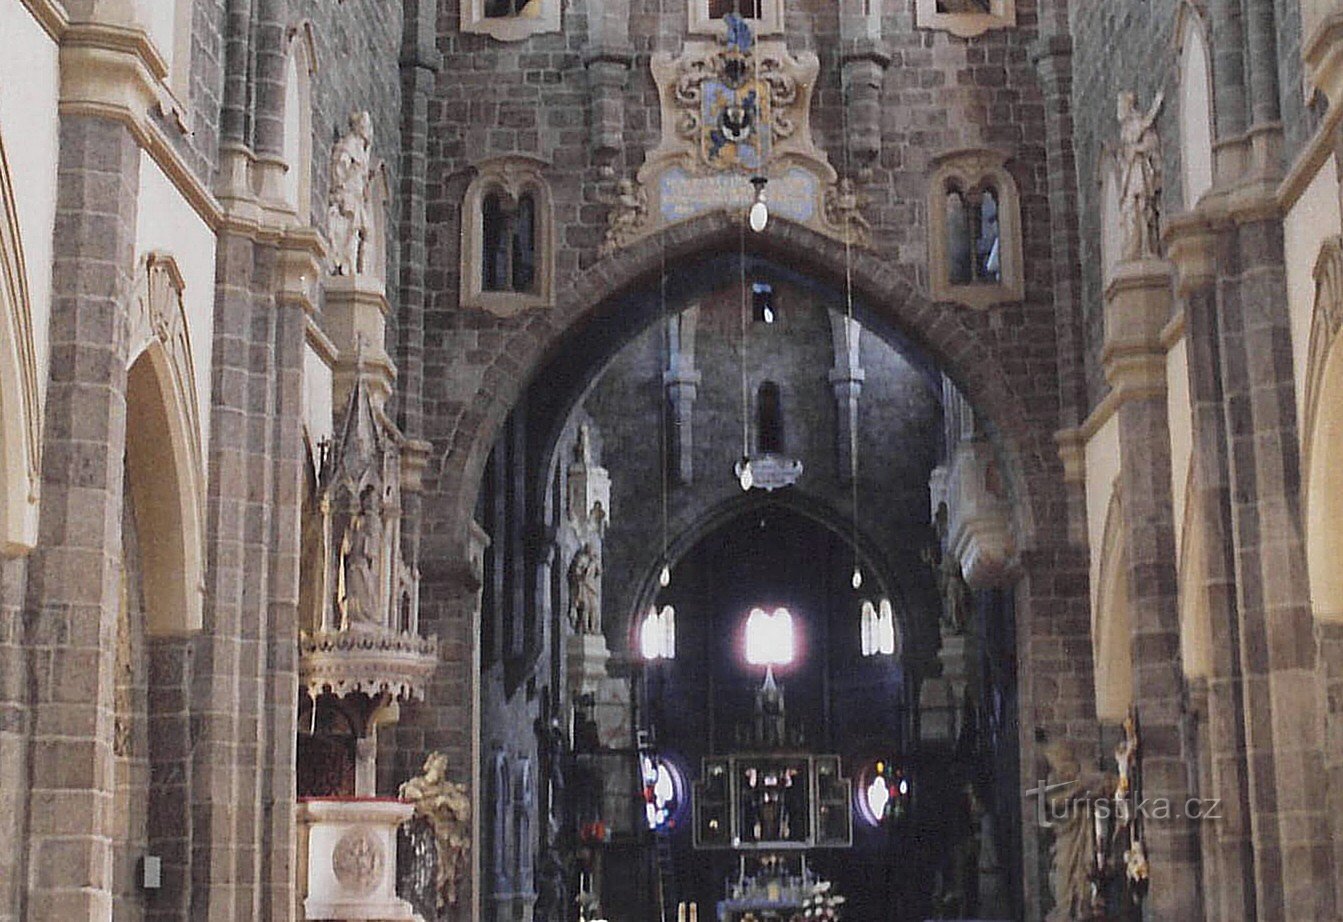 大聖堂の内部